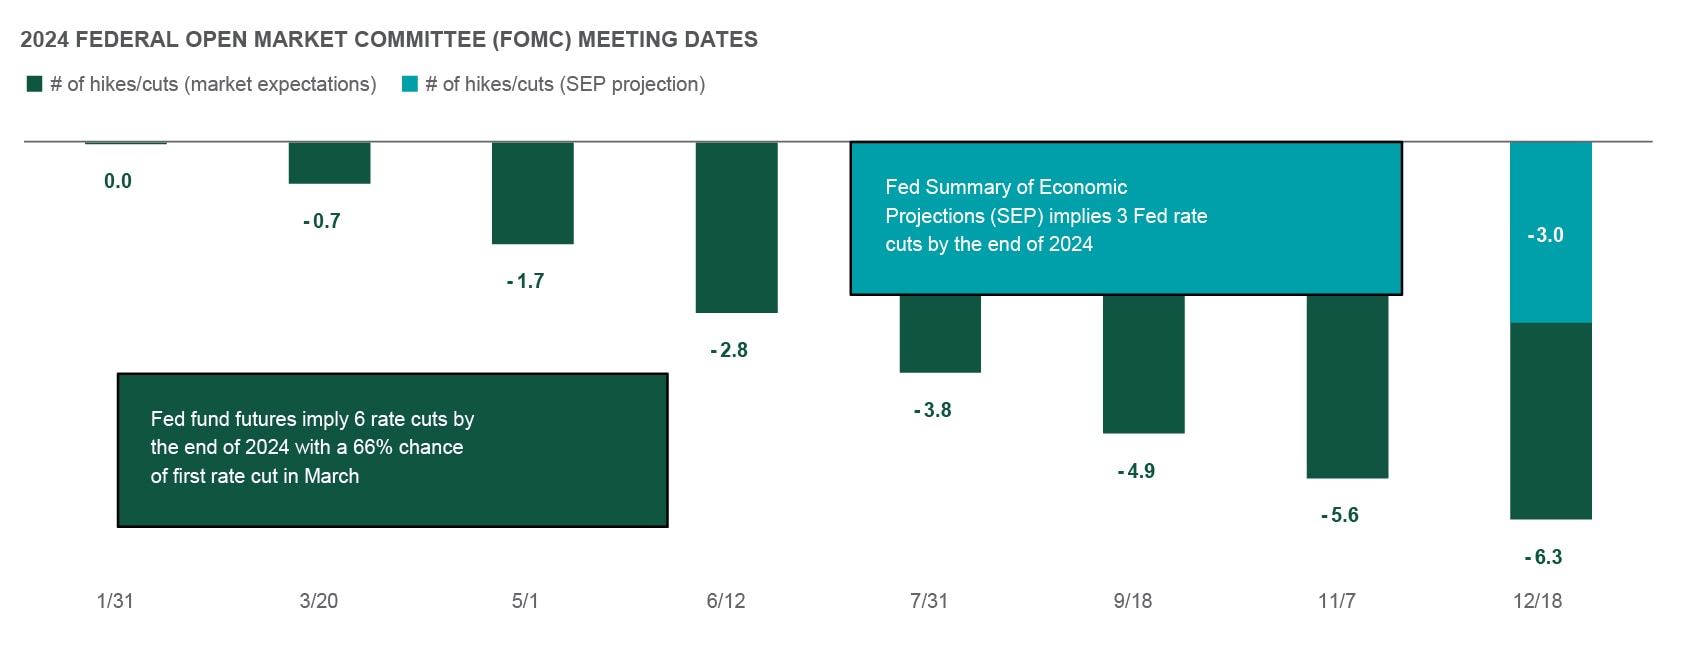 FOMC meeting dates